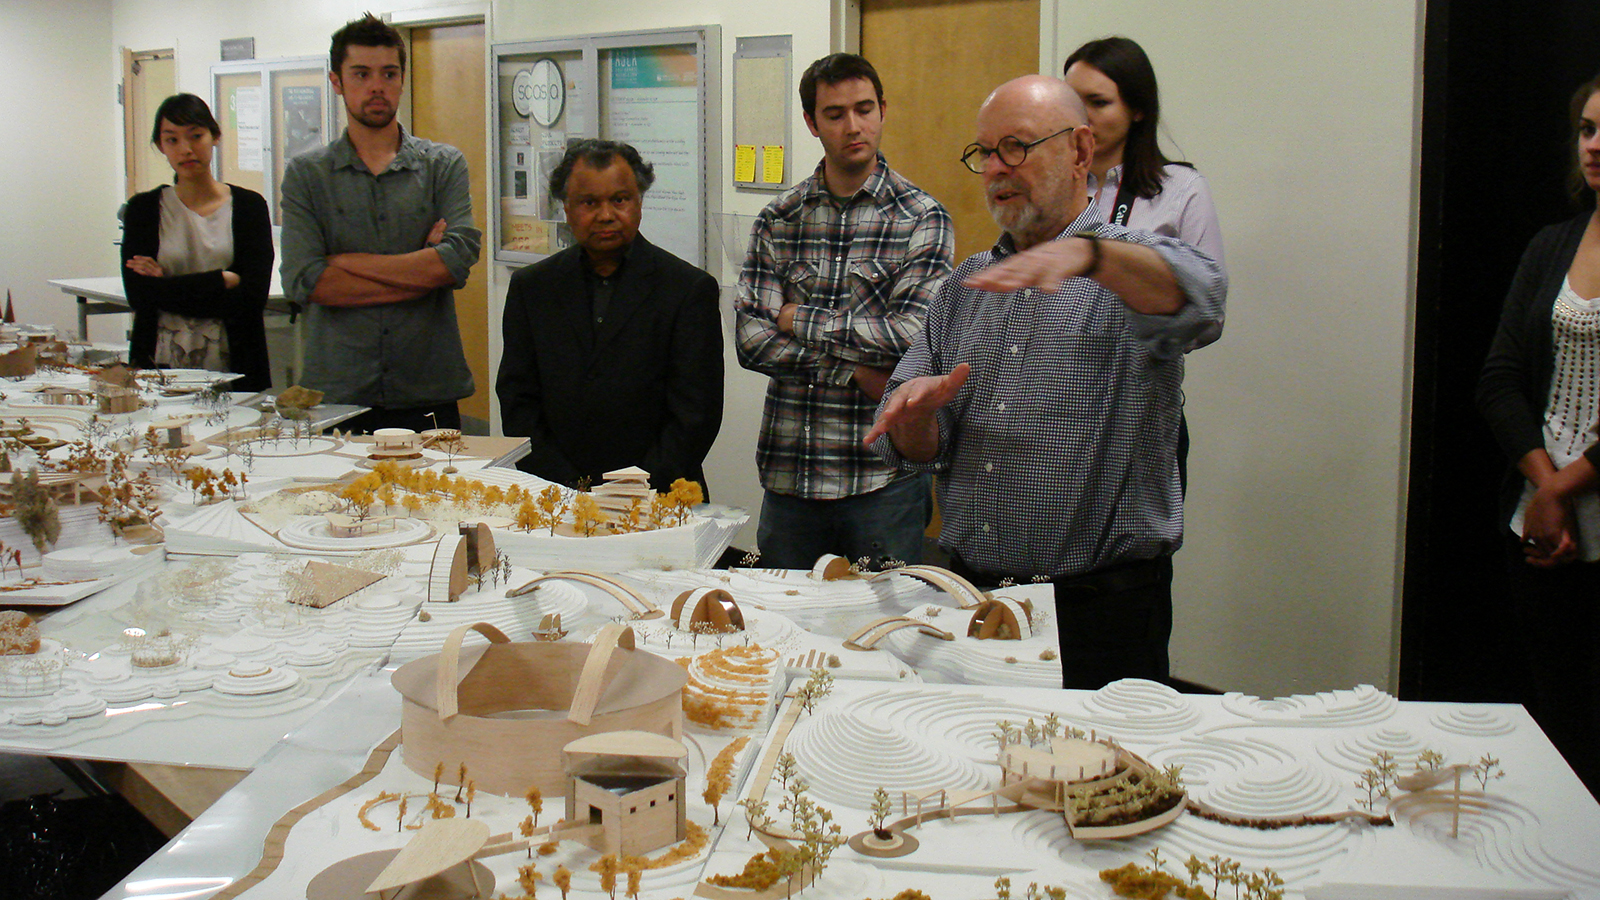 Landscape architecture professors observe student work in the studio